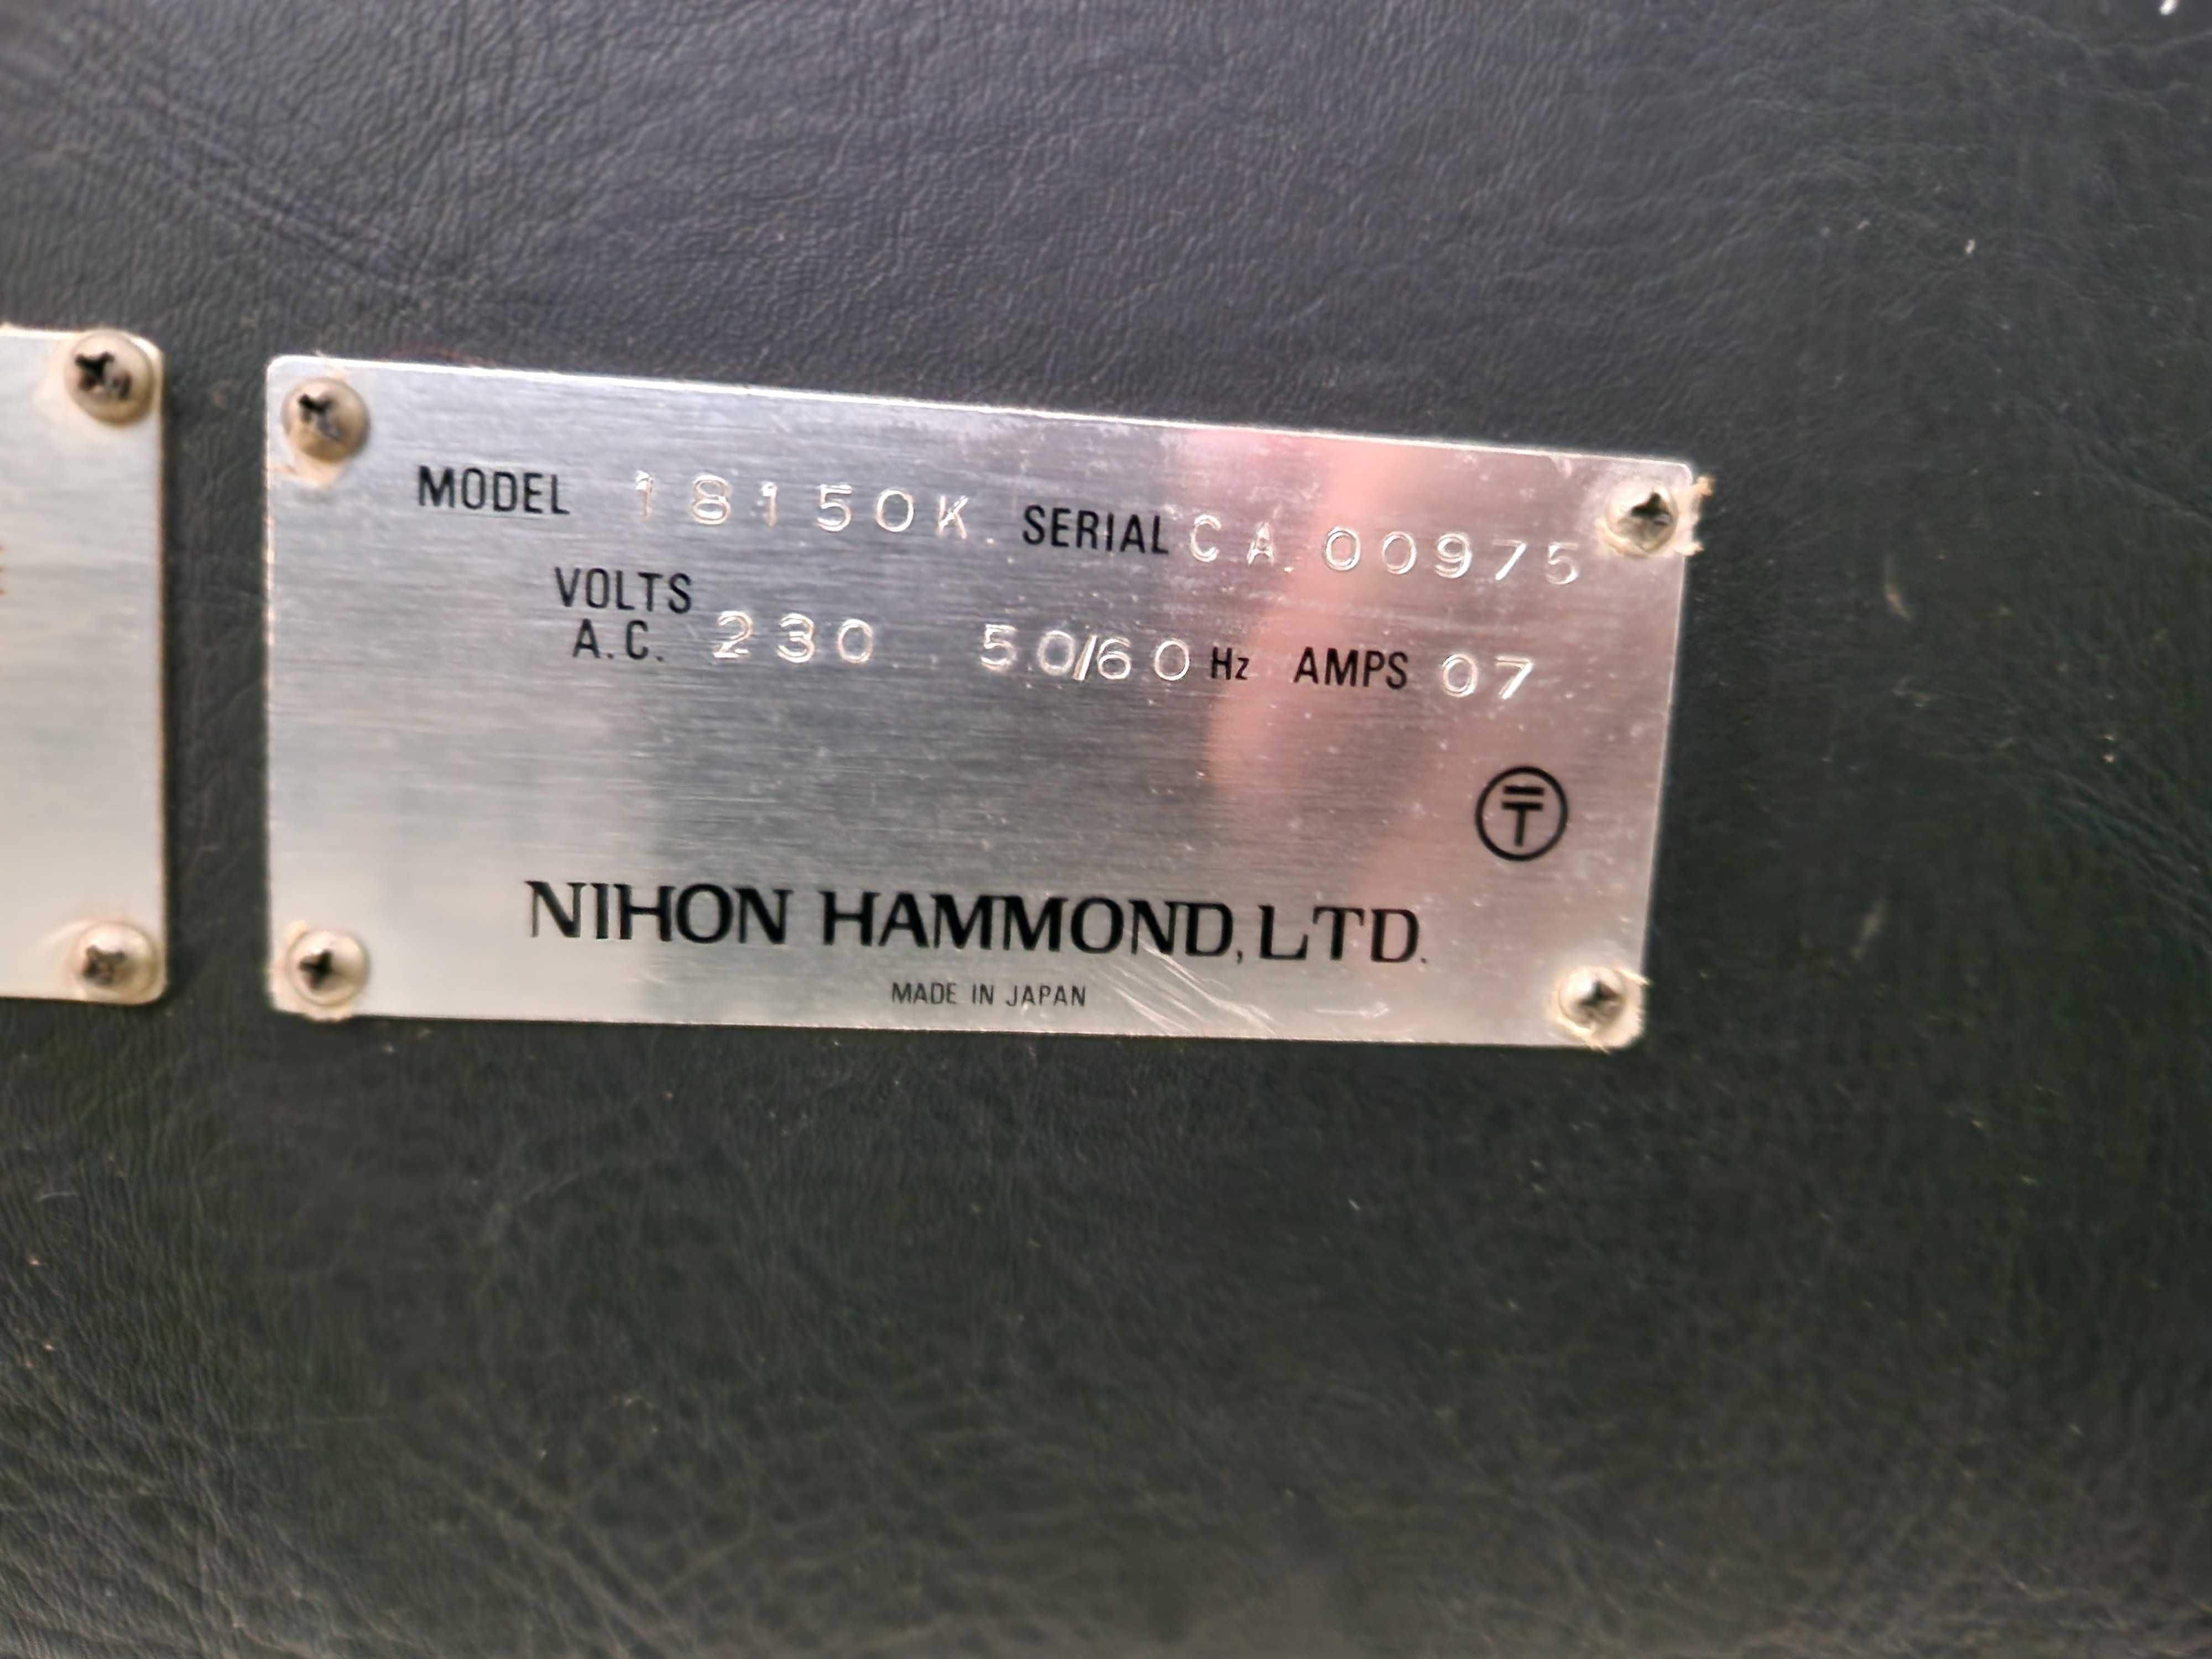 Hammond orgel  8150K